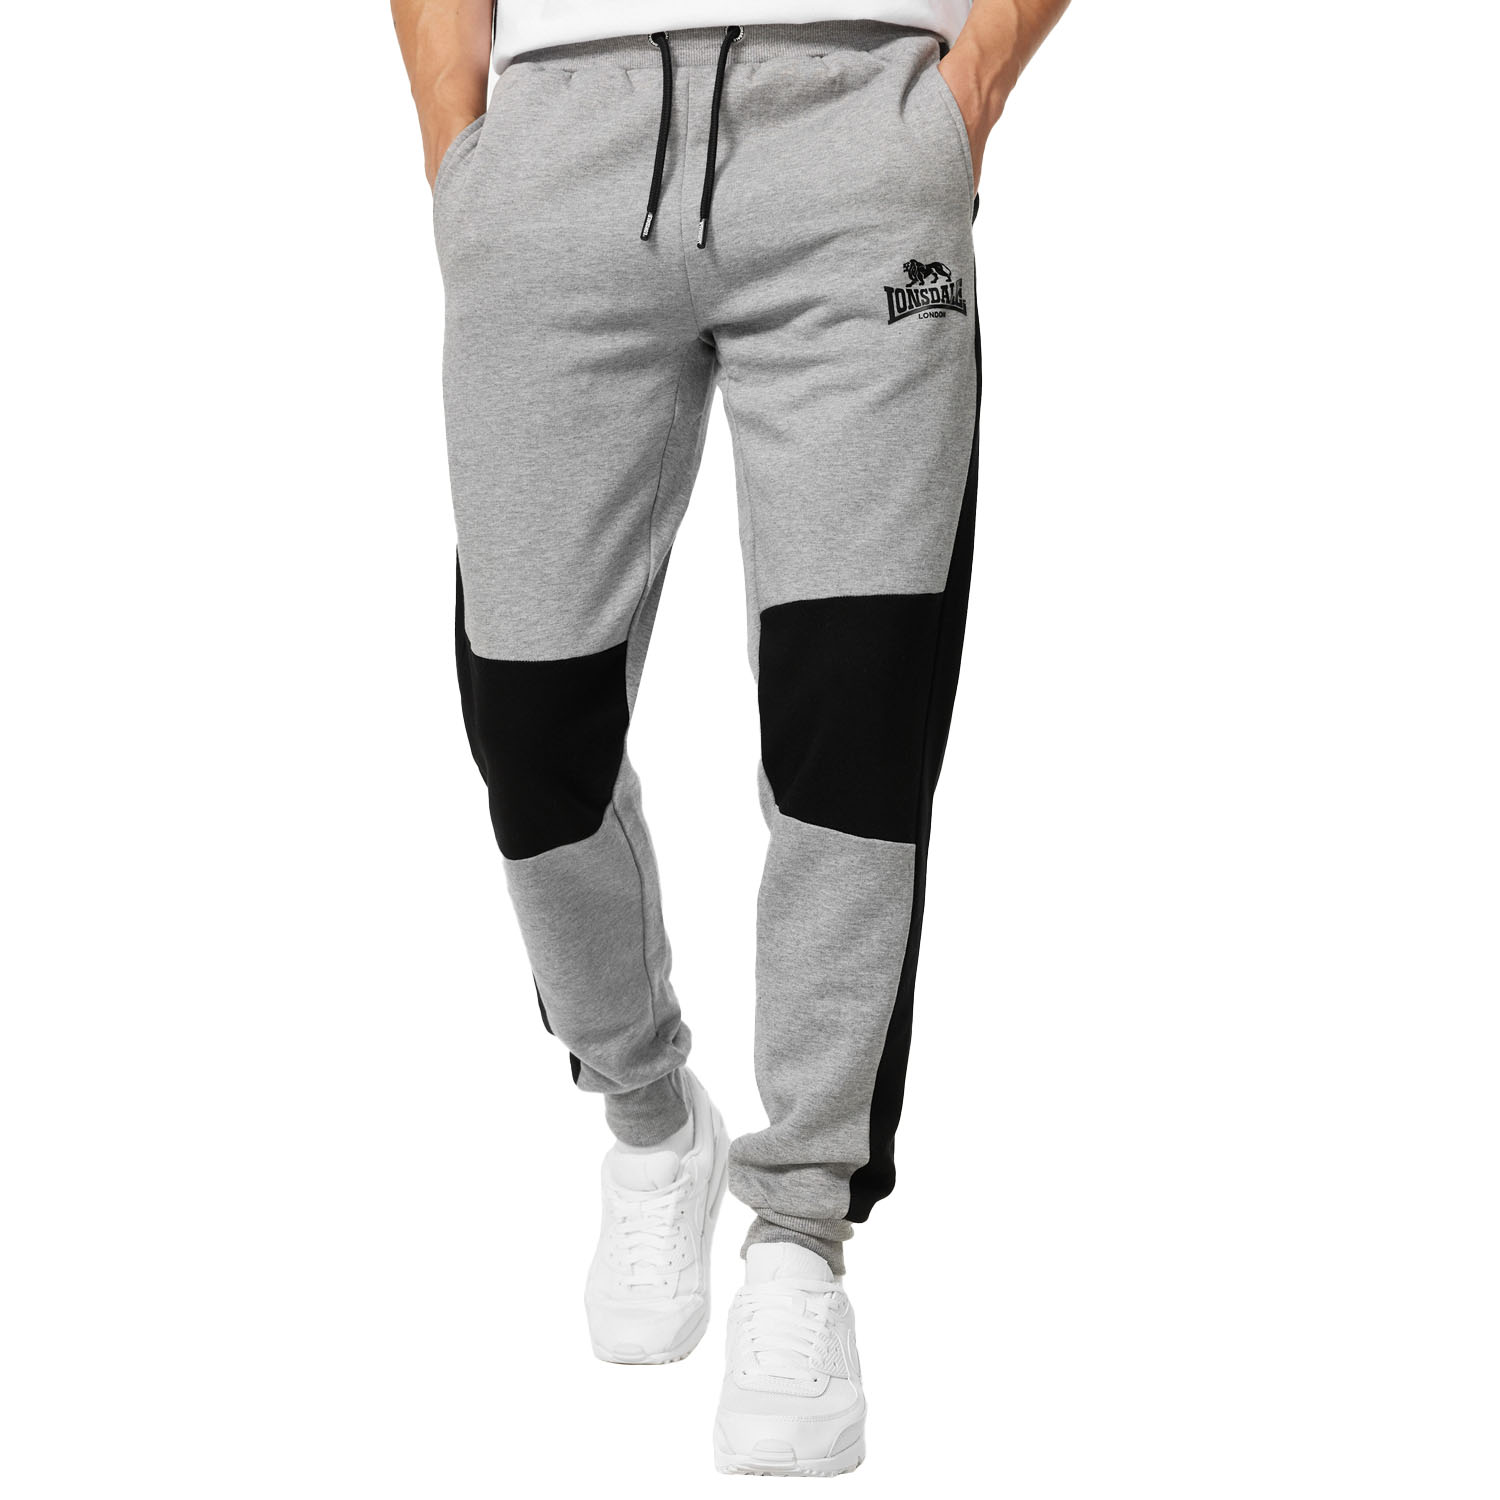 Lonsdale Jogging Pants, Smerral, grey-black, S